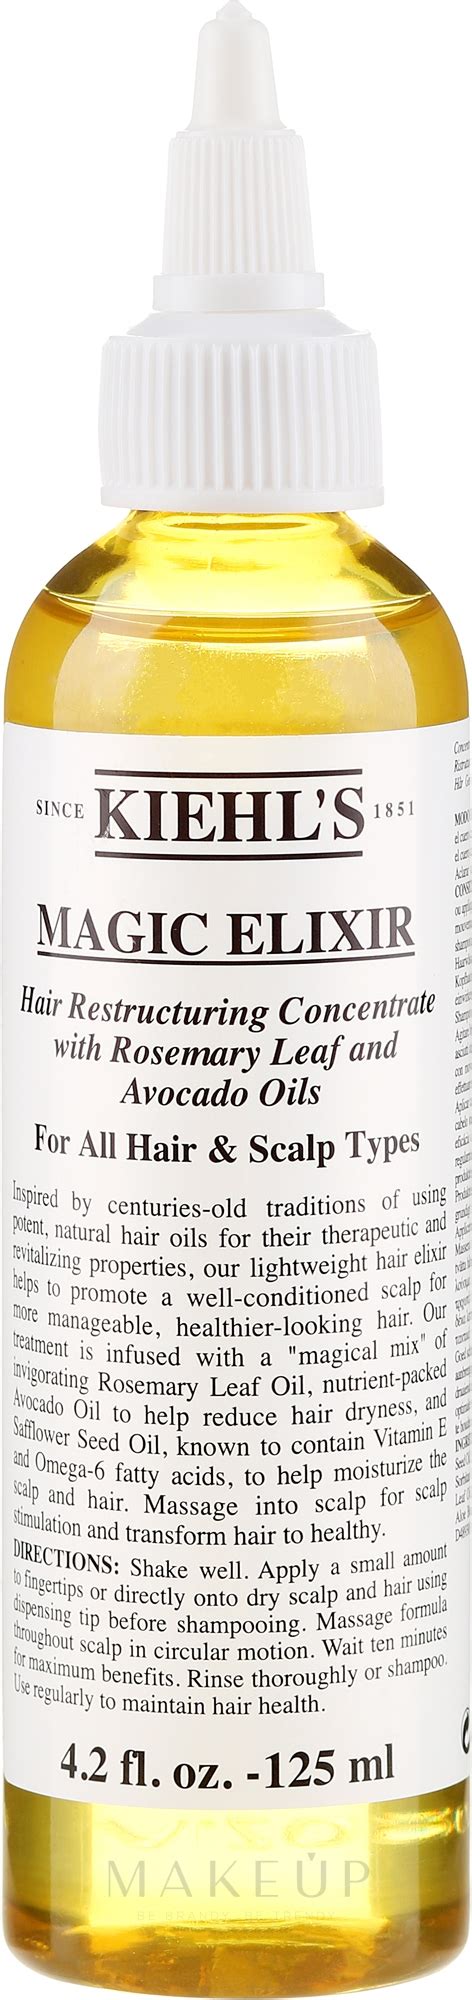 Kiehls Magic Elixir Hair Restructuring Concentrate Hair Elixir Makeup